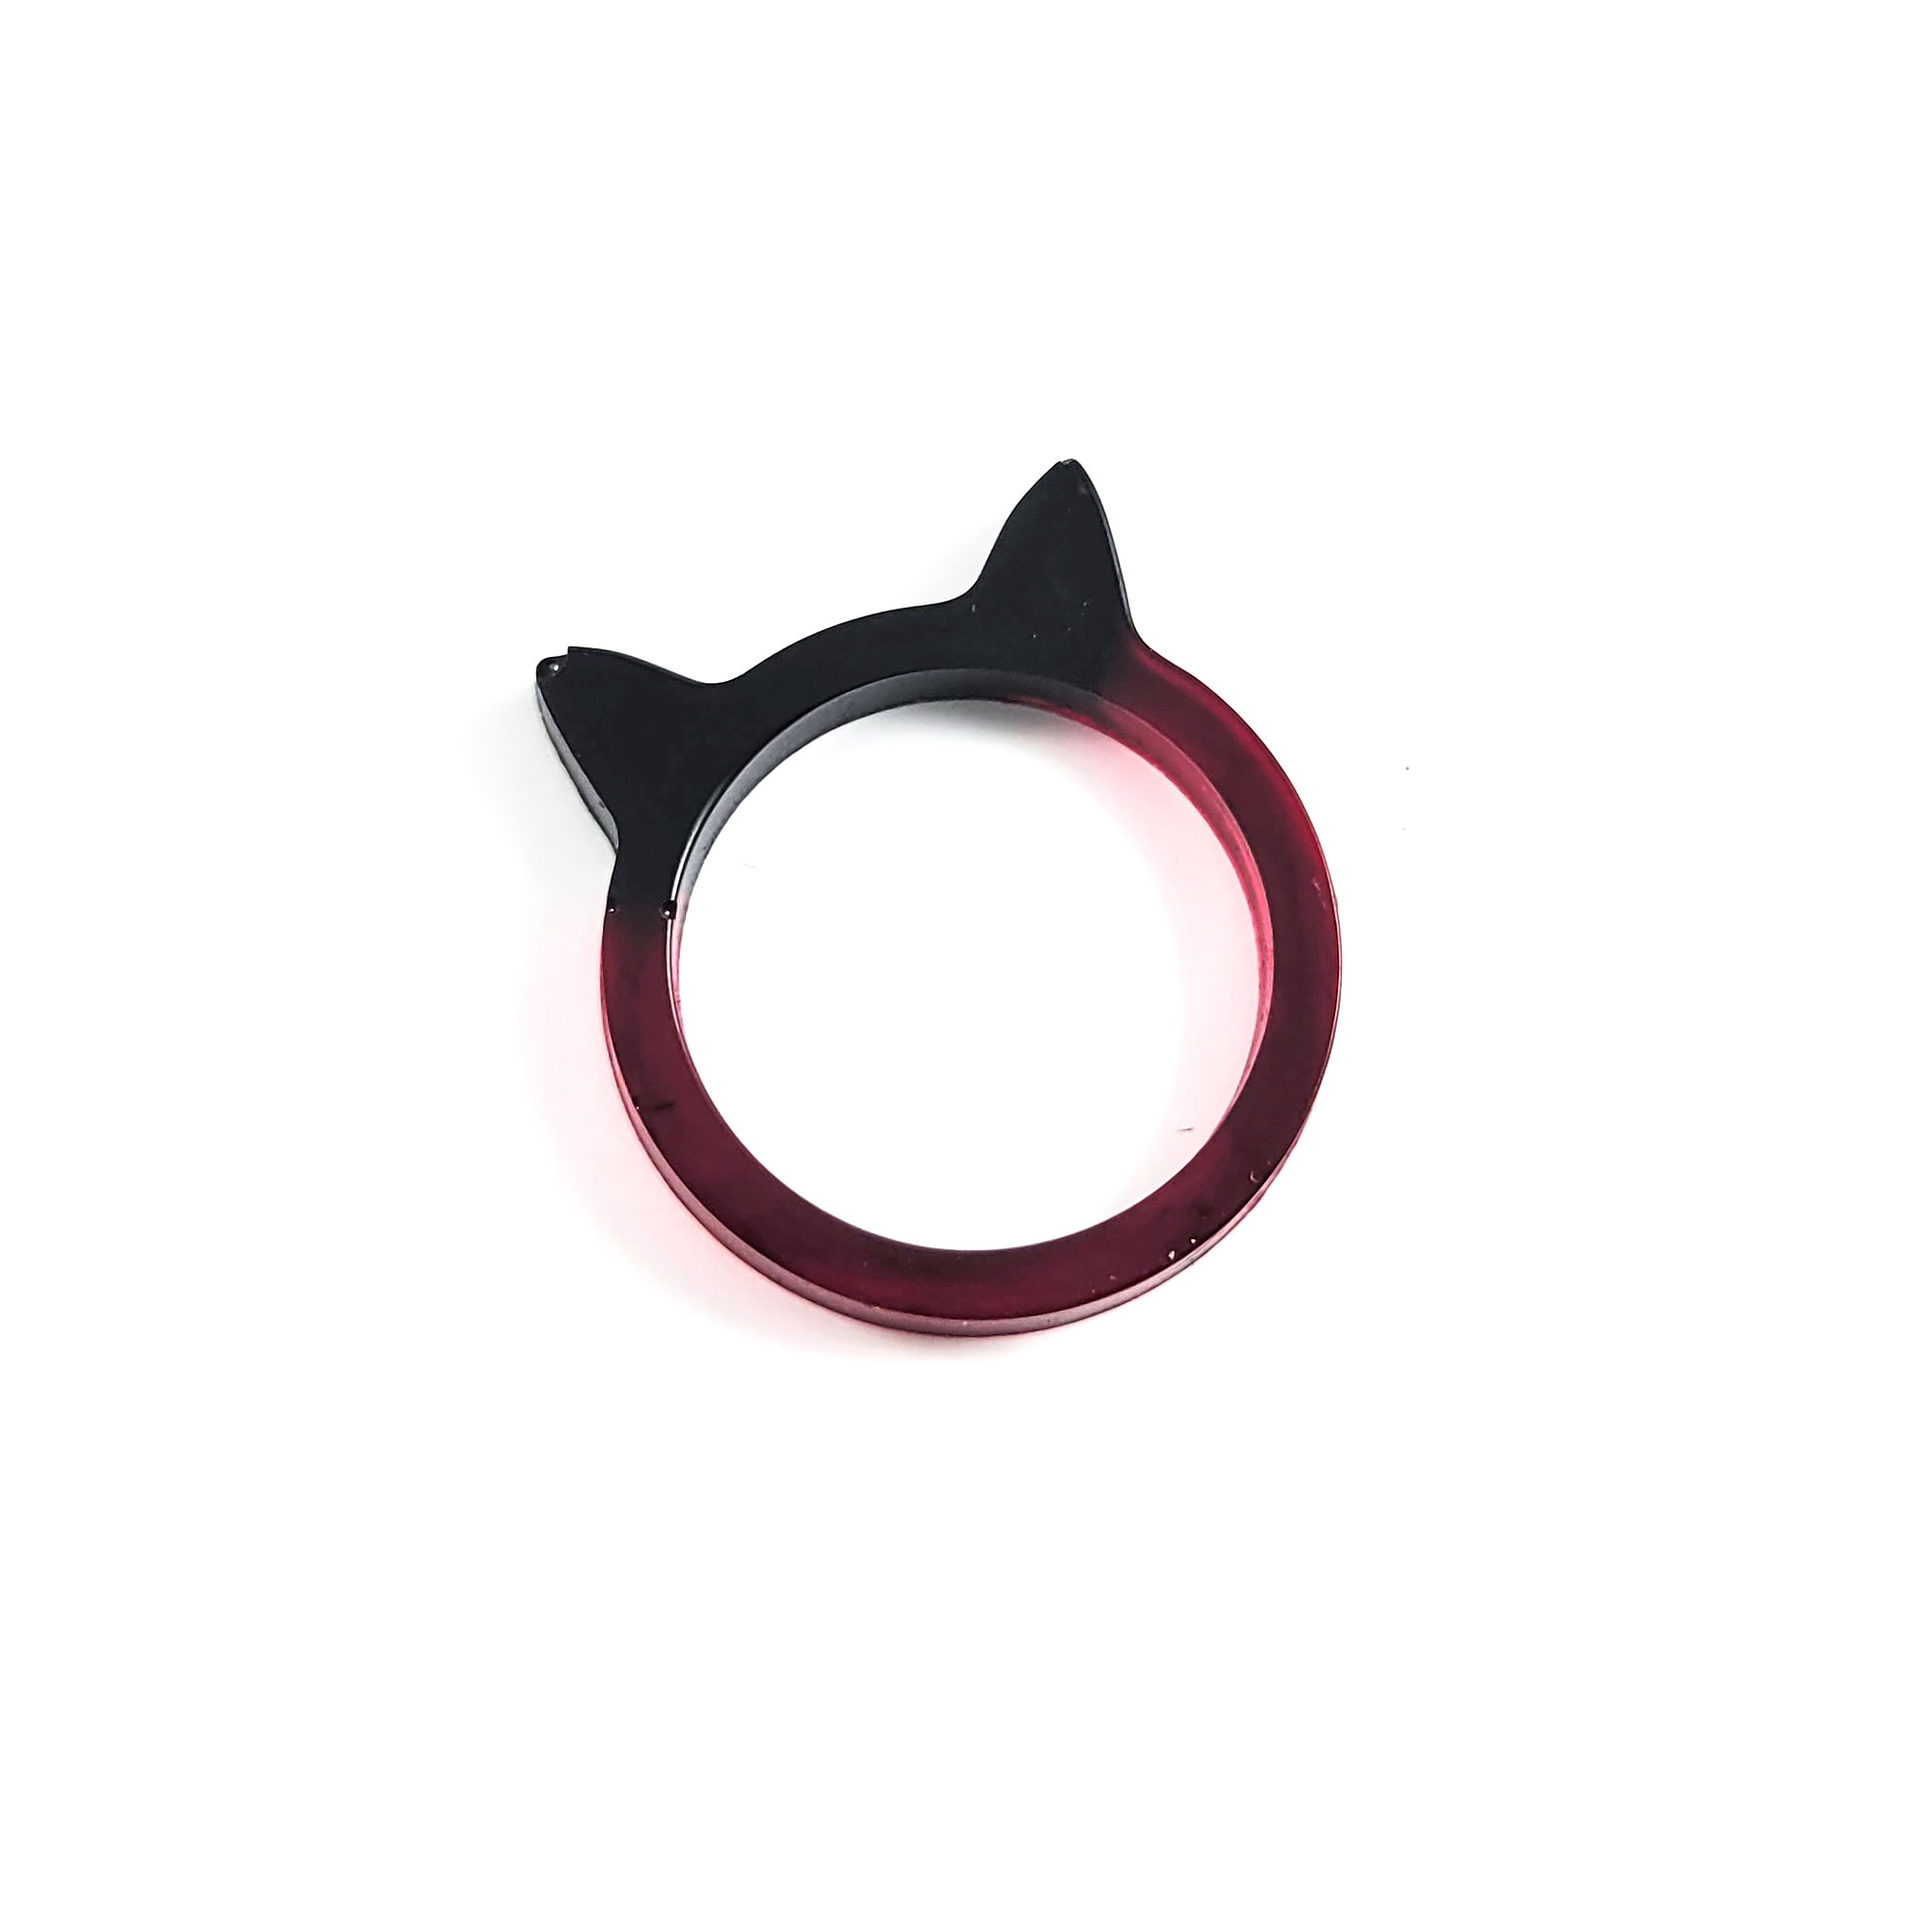 Kawaii Kitty Ring by Wilde Designs